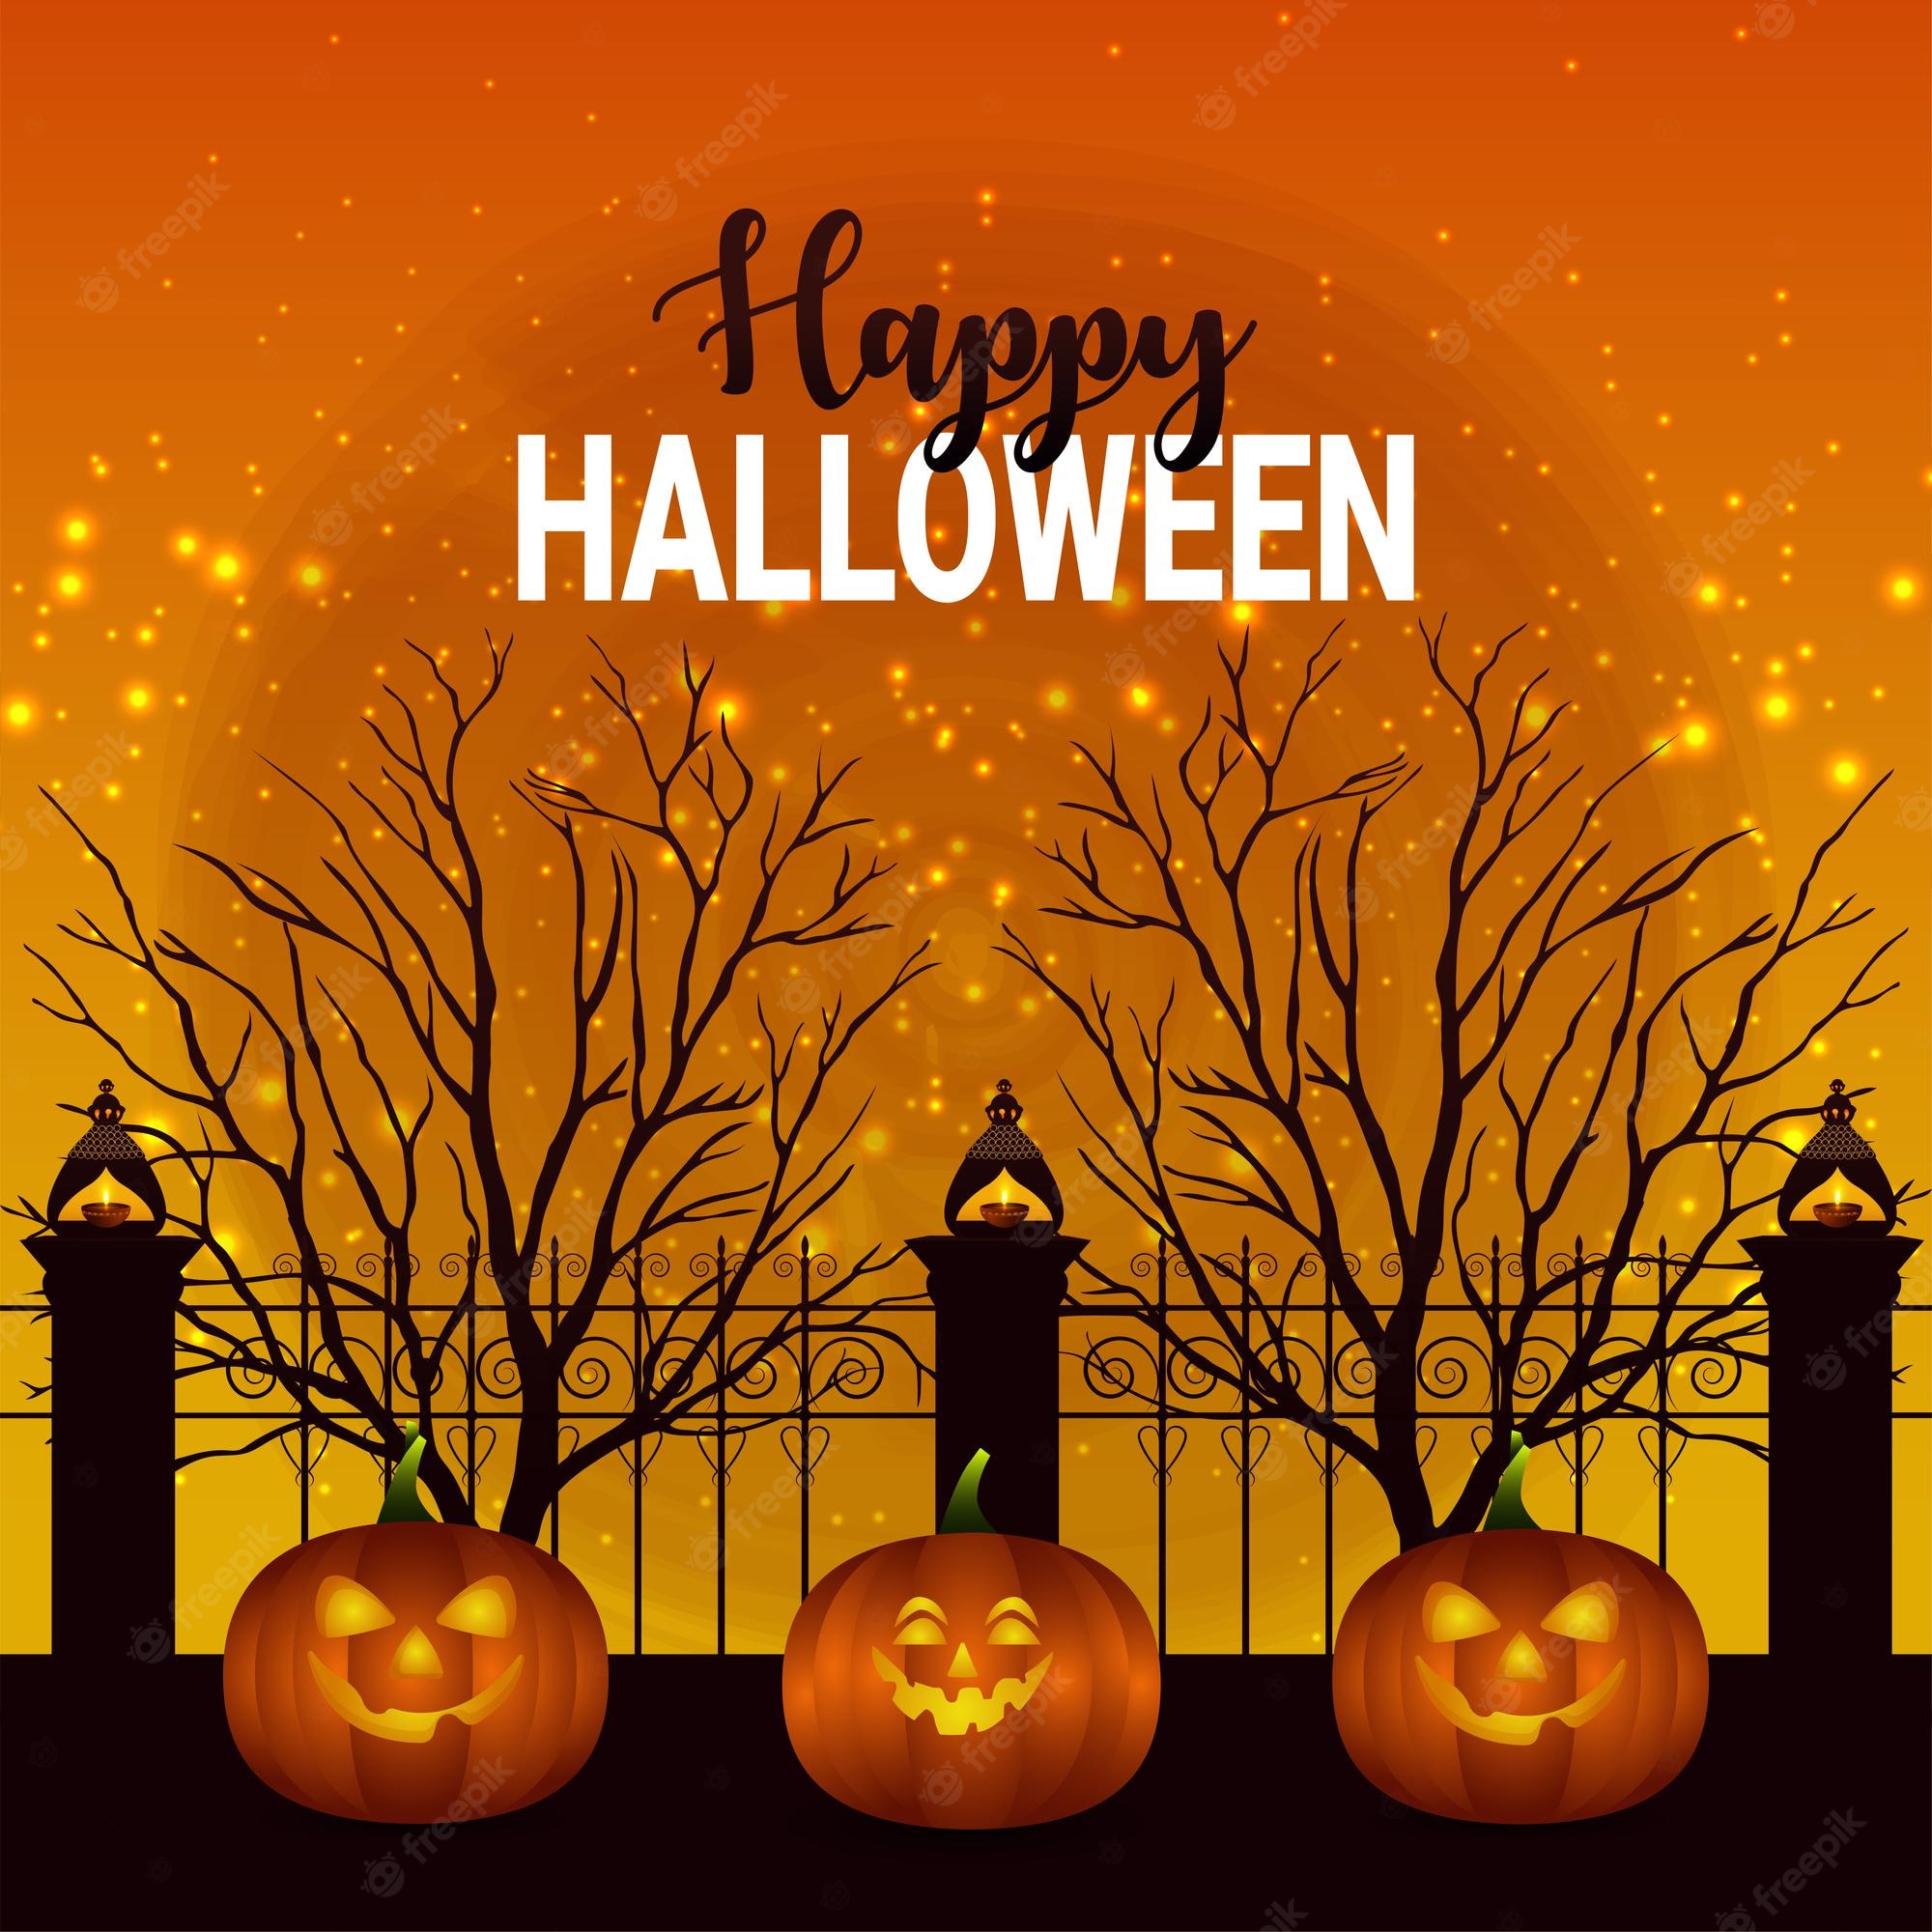 Halloween emoji Vectors & Illustrations for Free Download.